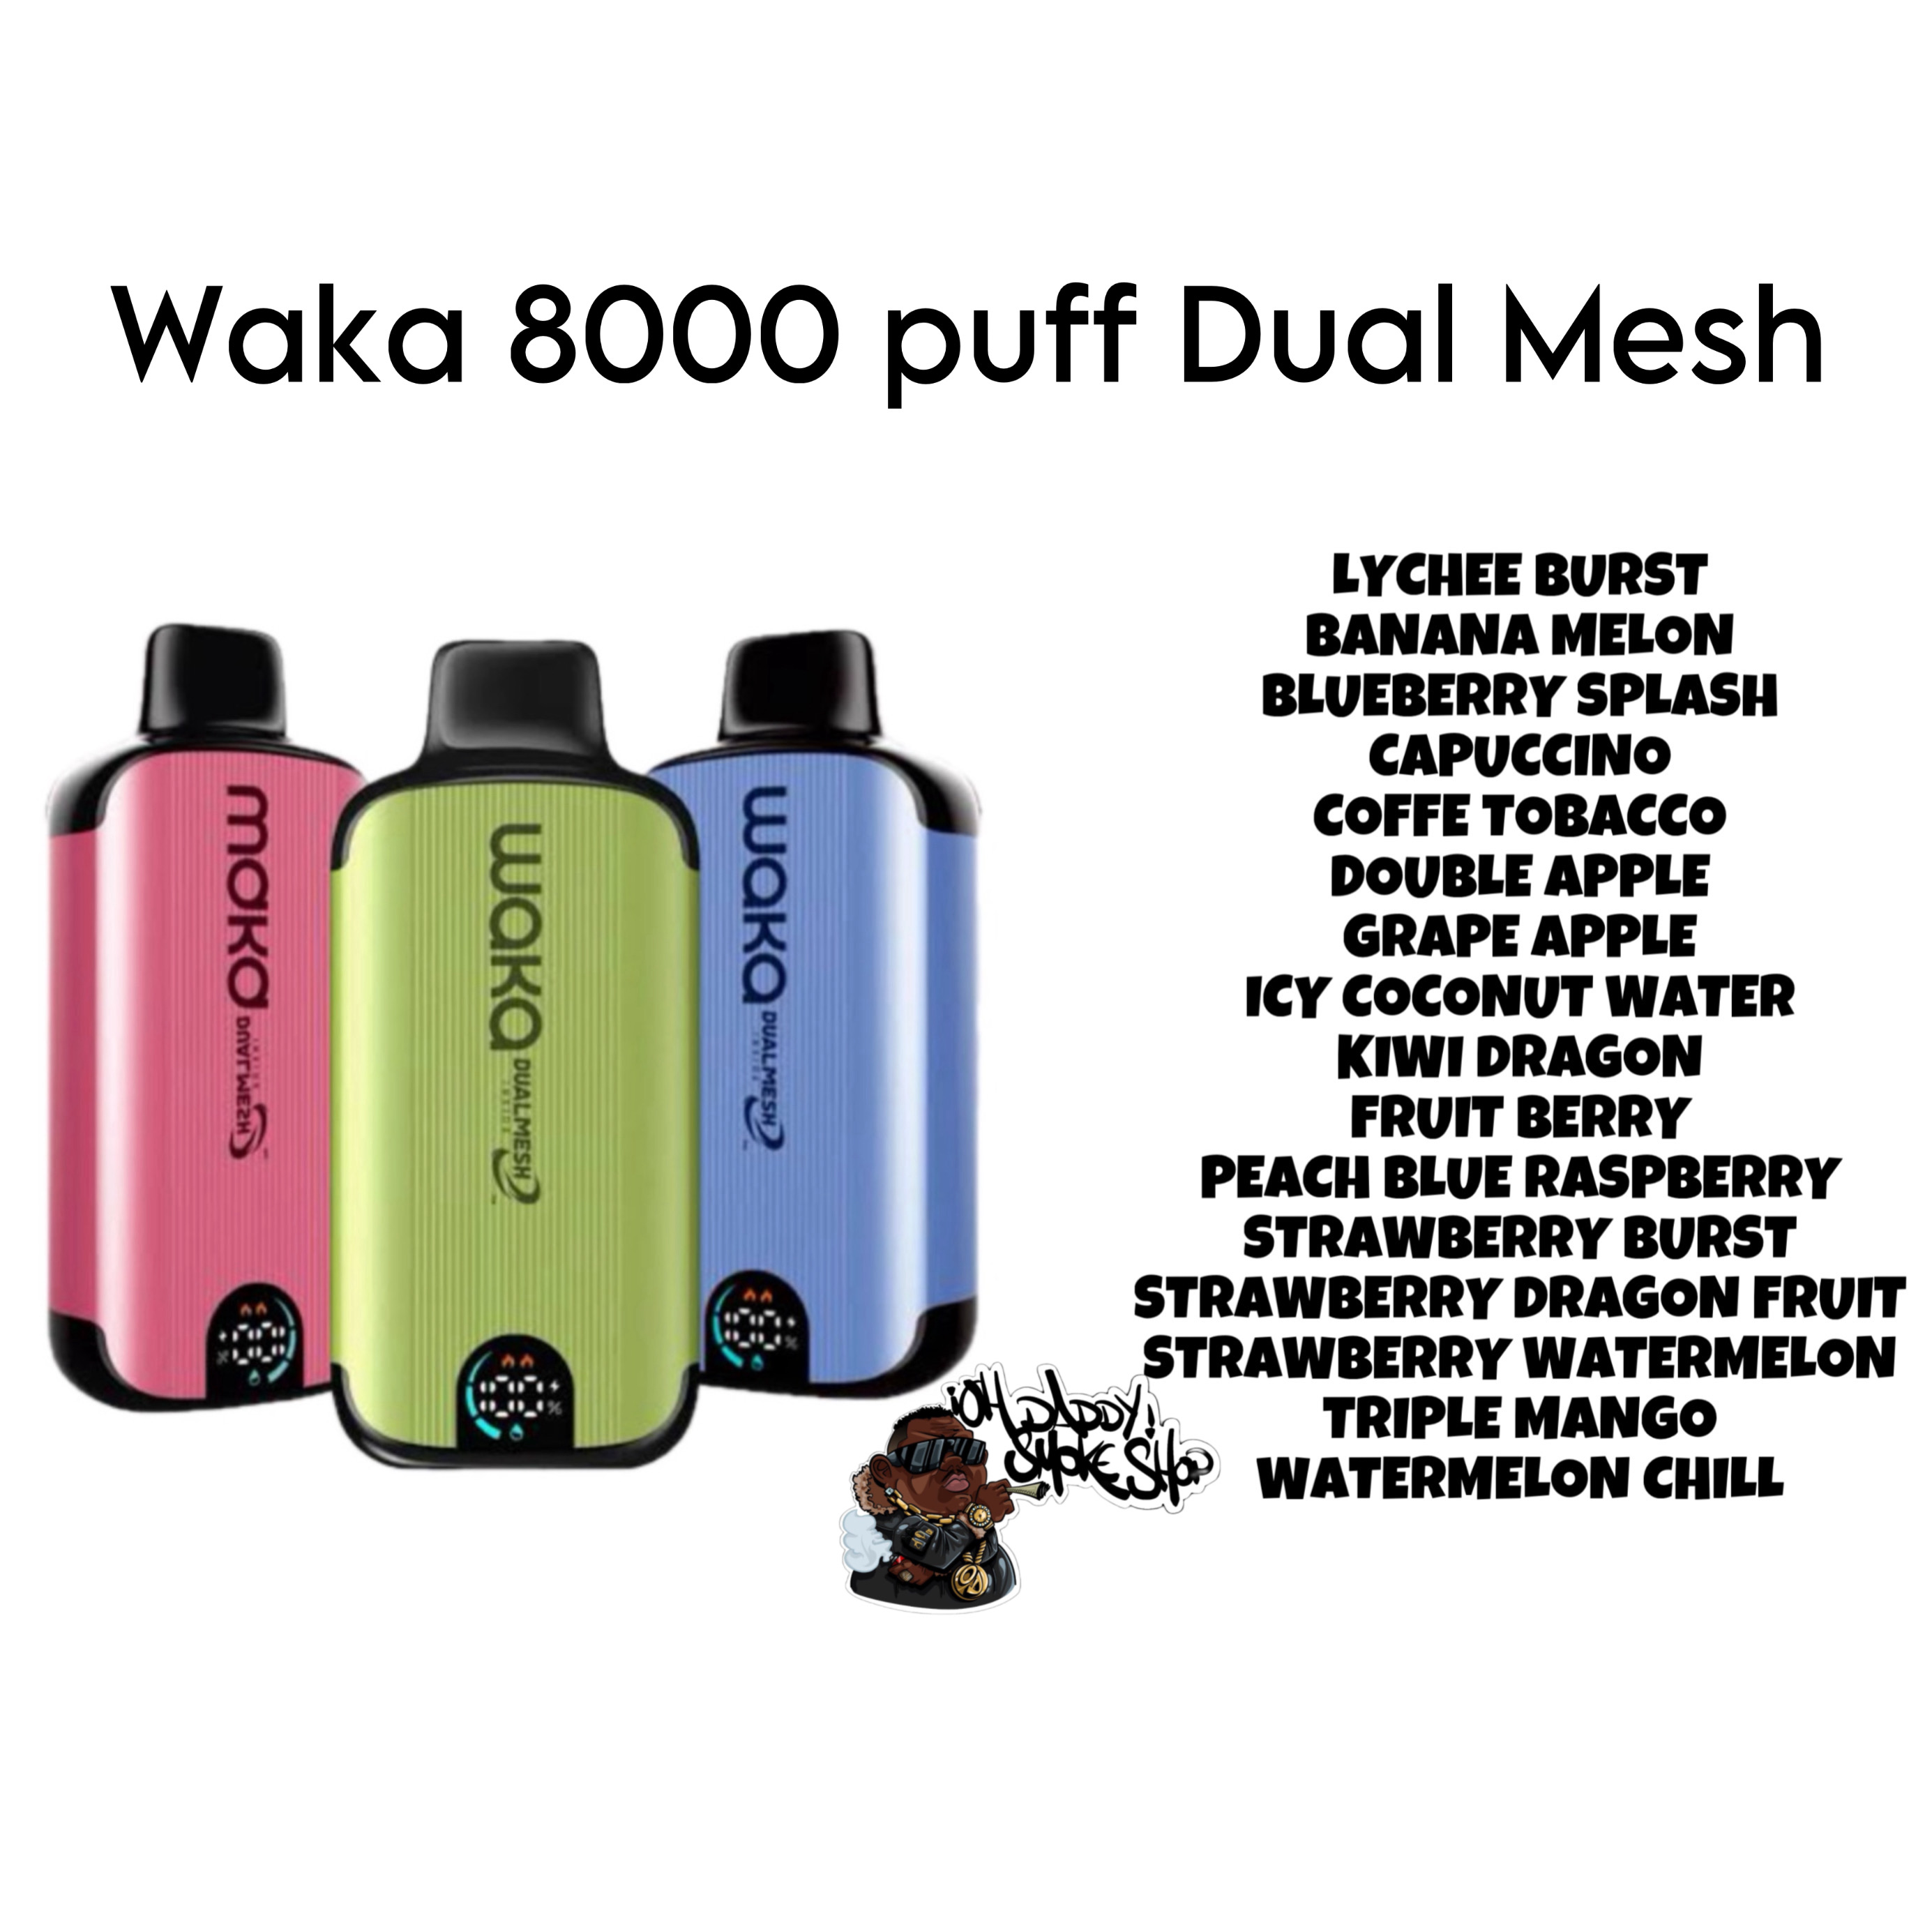 Waka 8000 puff